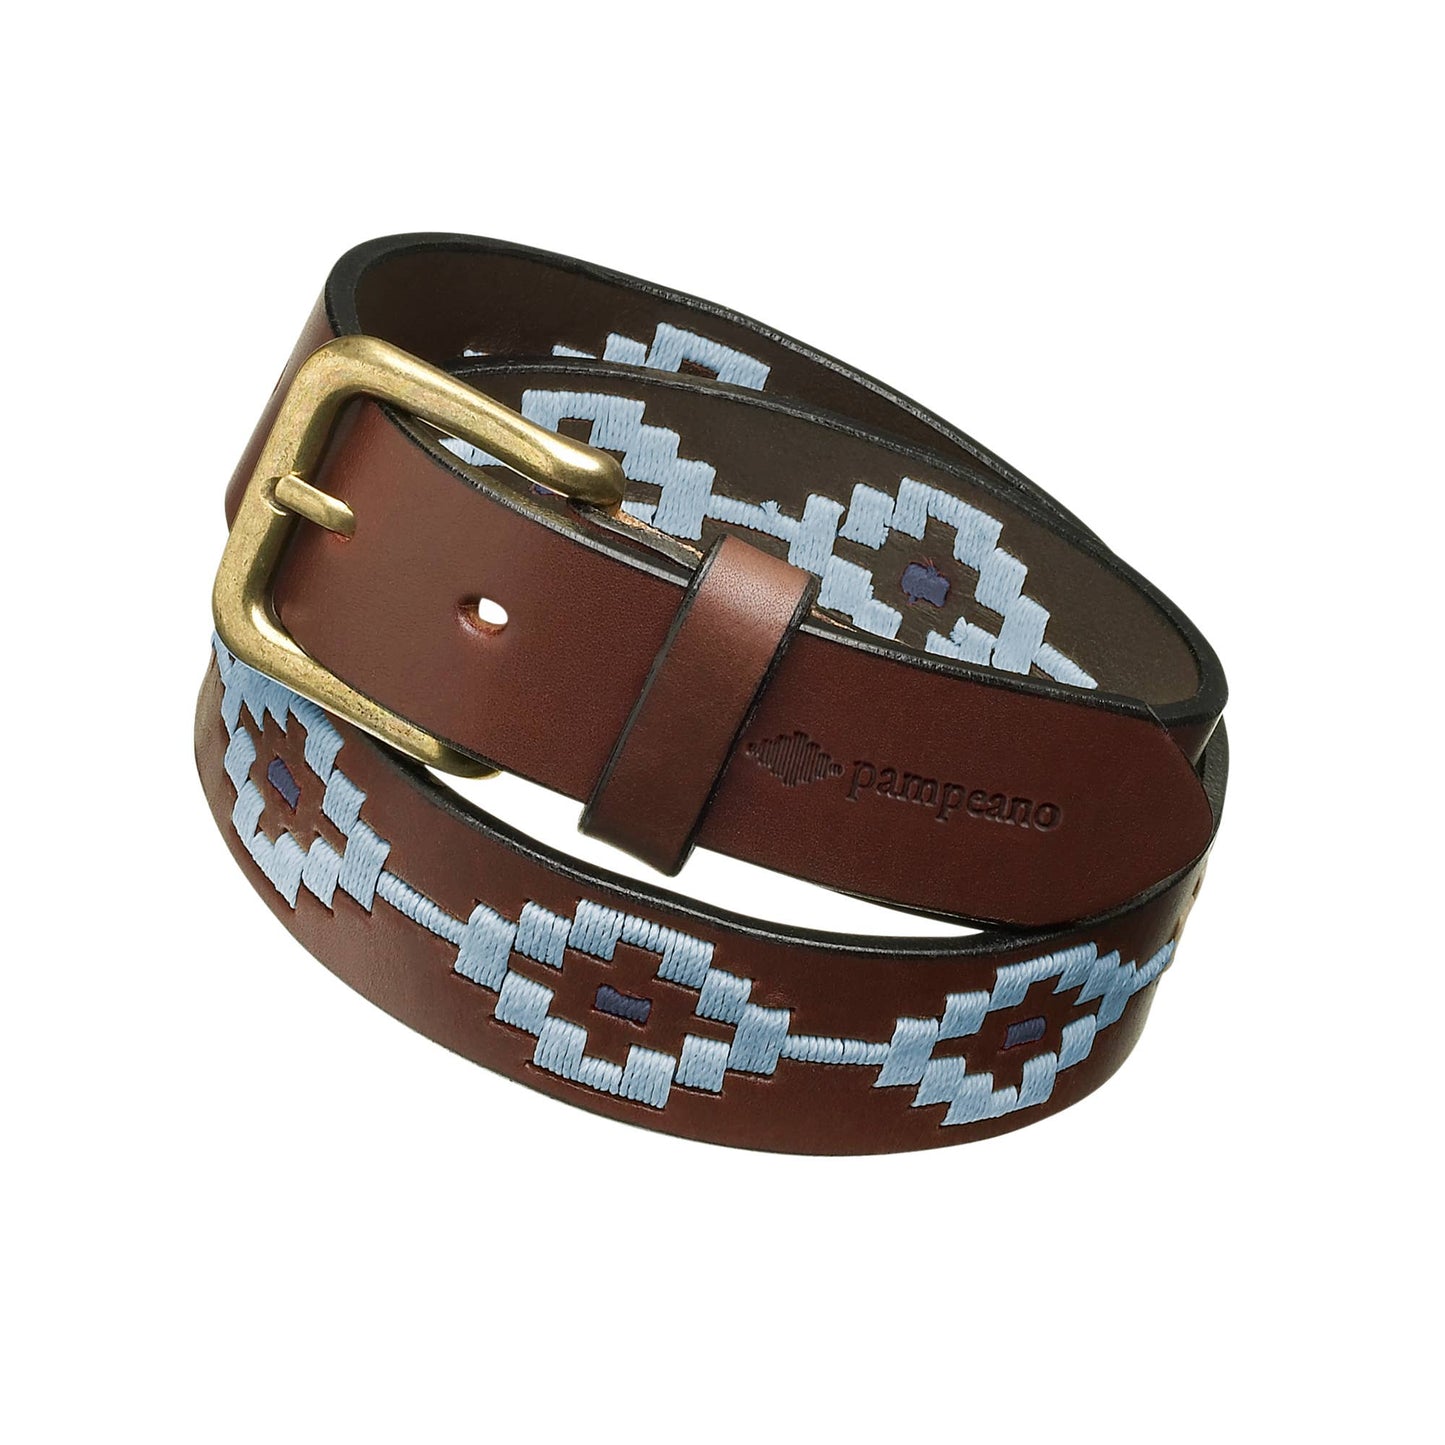 Dinastia hand-stitched leather belt